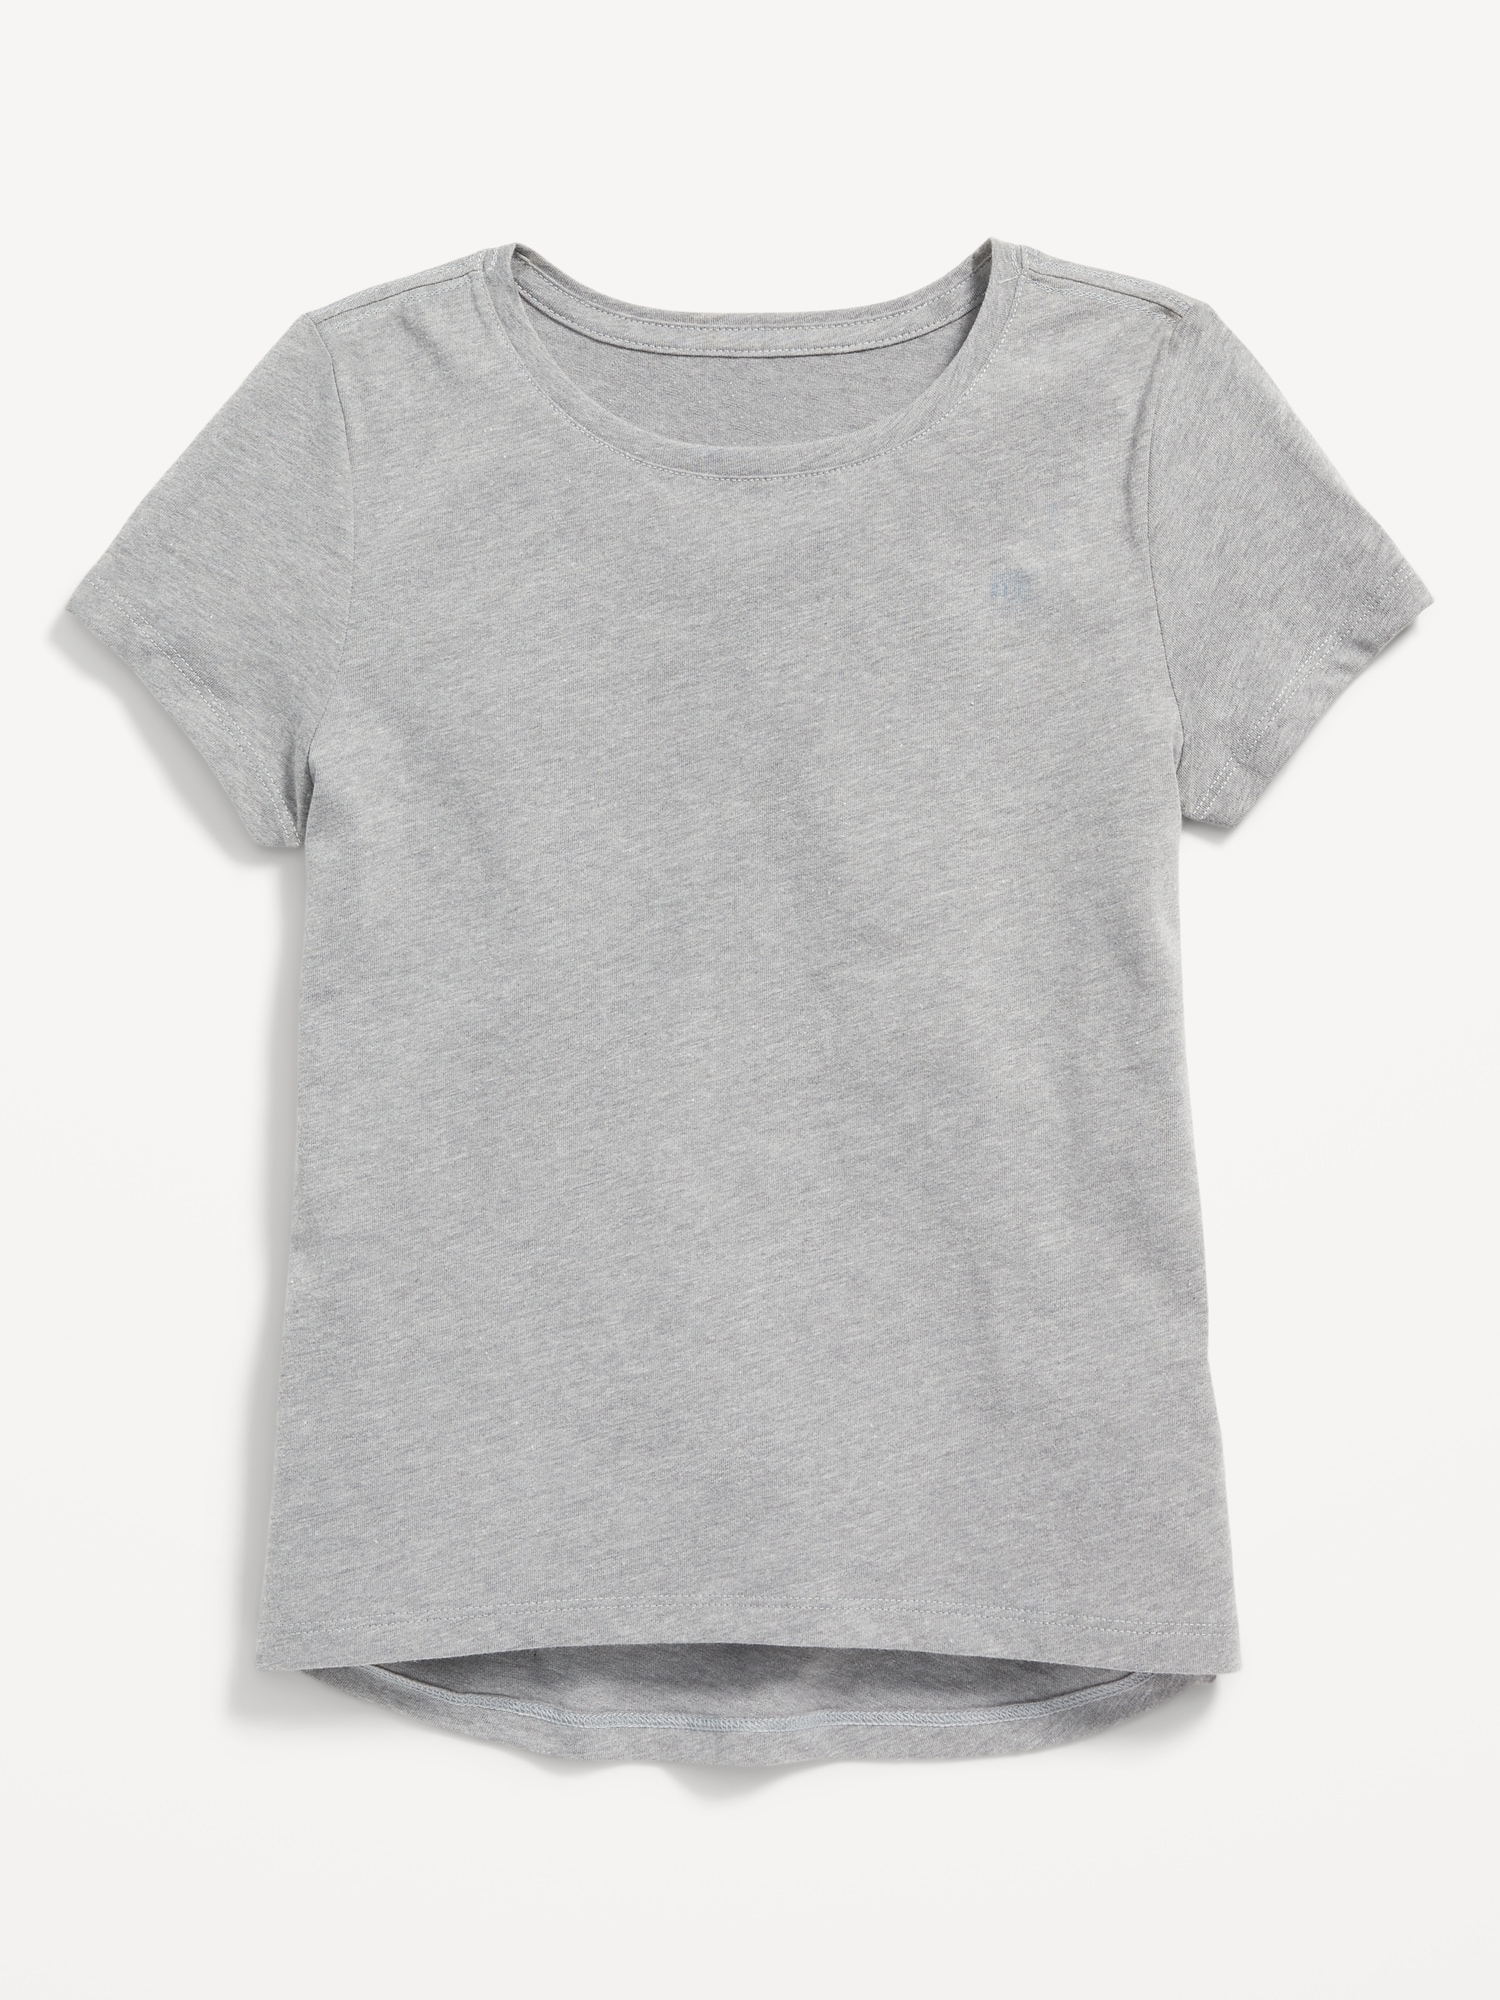 Old Navy Short-Sleeve Softest Solid T-Shirt for Girls black. 1